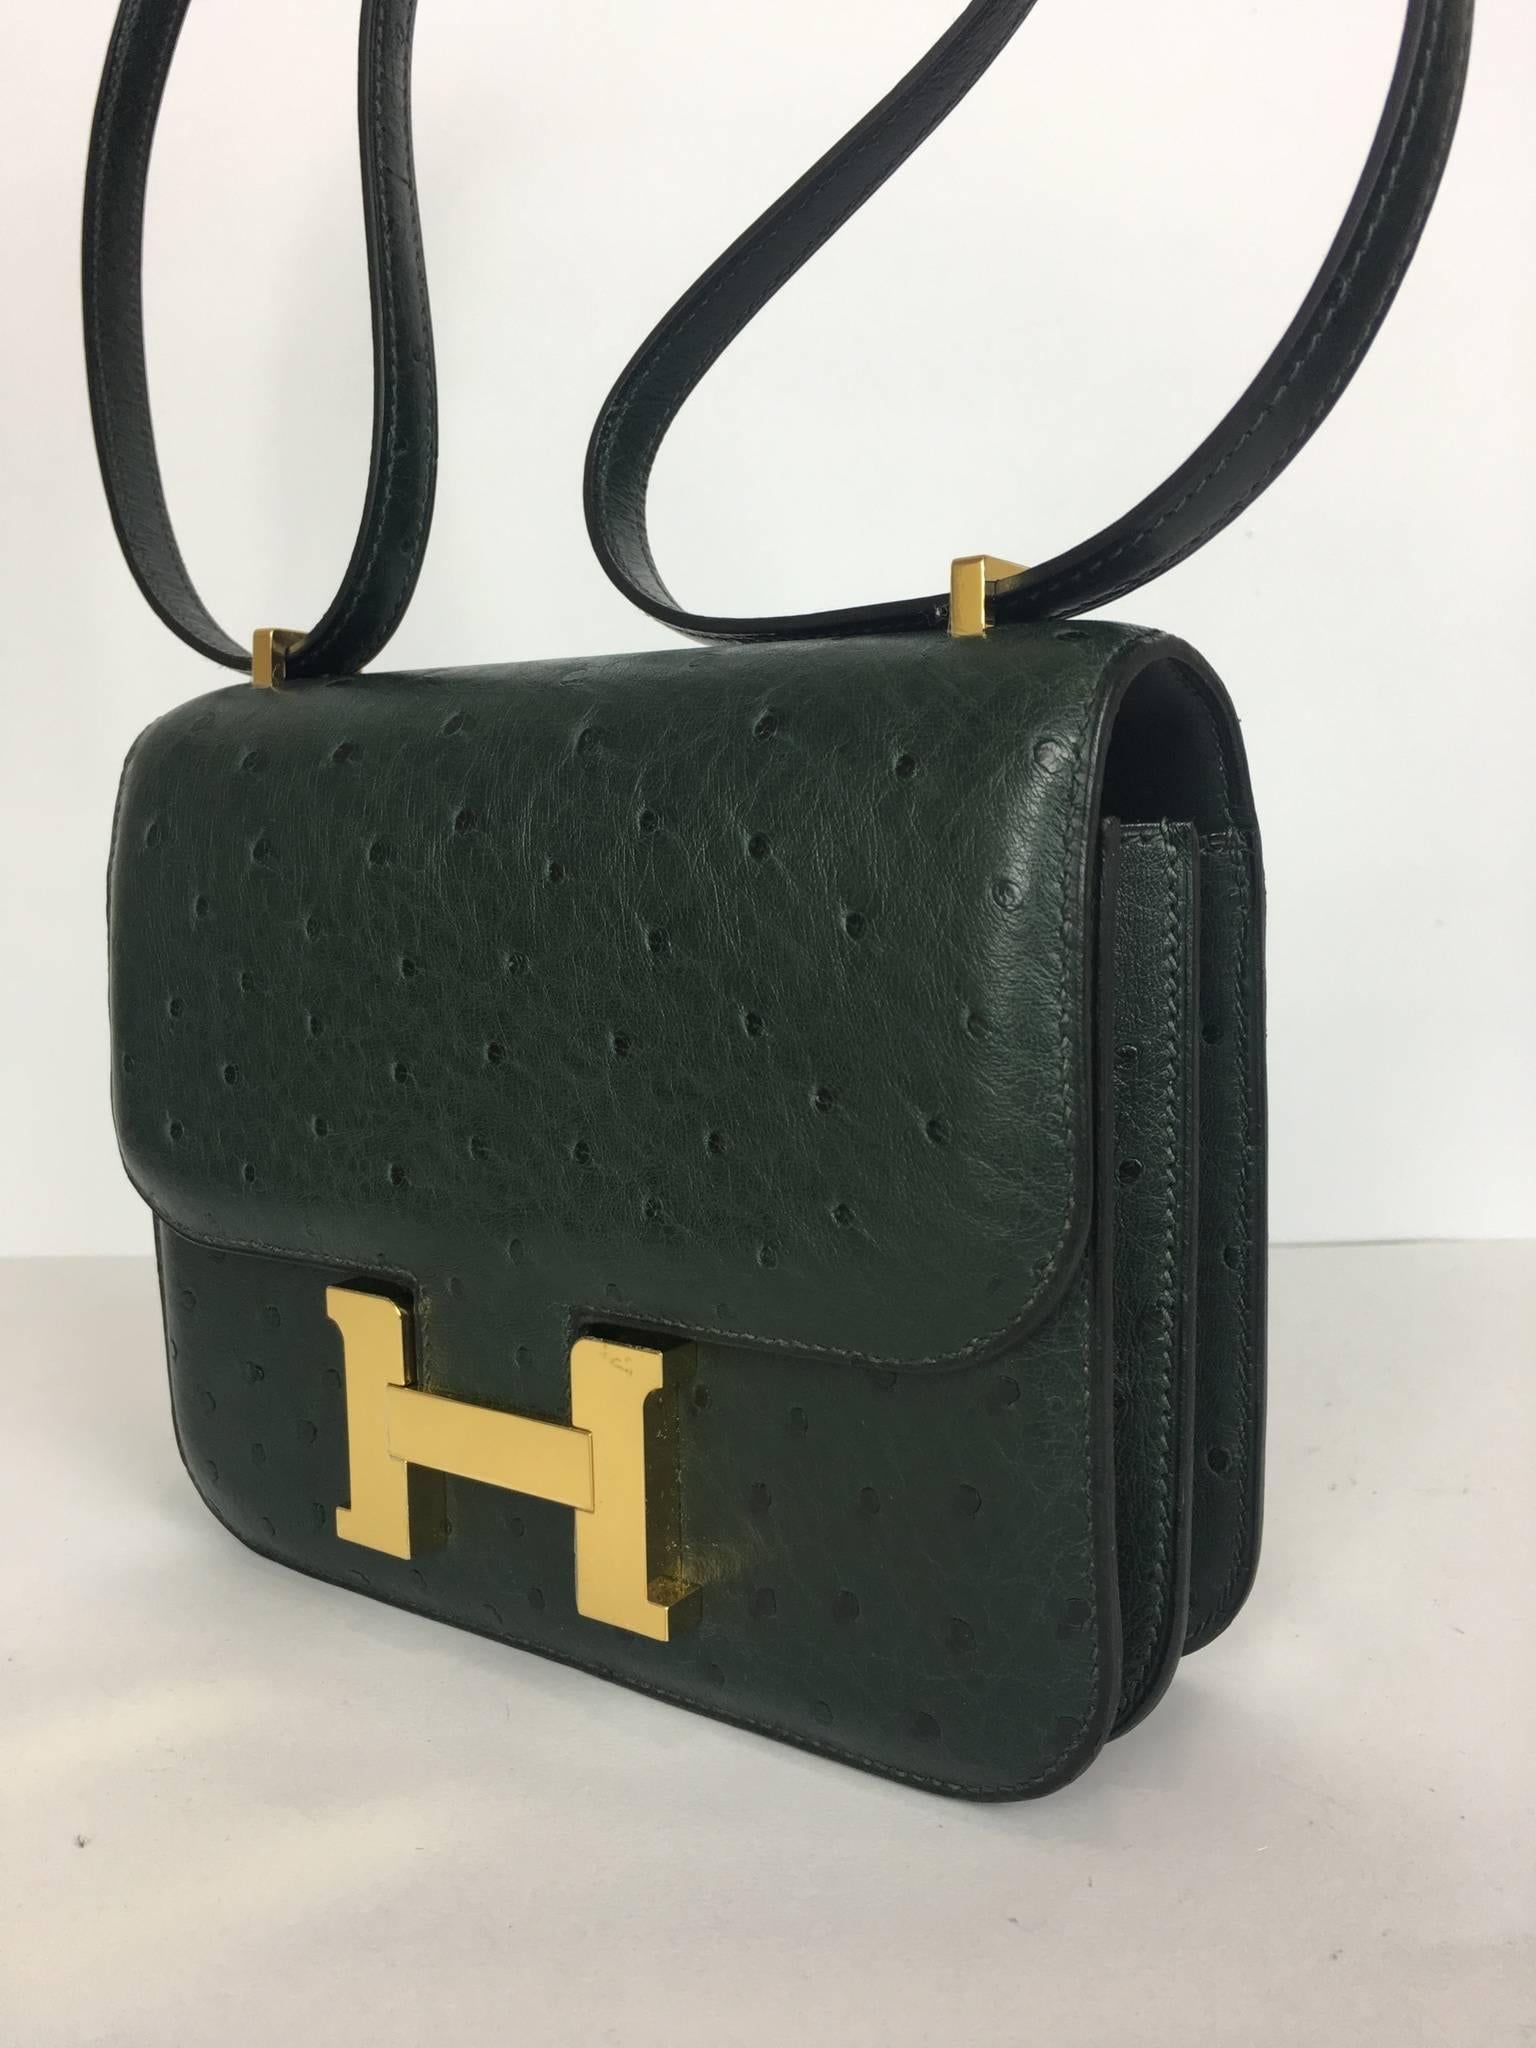 New never worn Hermes Bag
Constance
Mini
Leather Ostrich
Color Vert Titien
Gold hardware

Comes full set: 
Original box
Invoice
Raincoat
Padlock & Keys
Dustbag